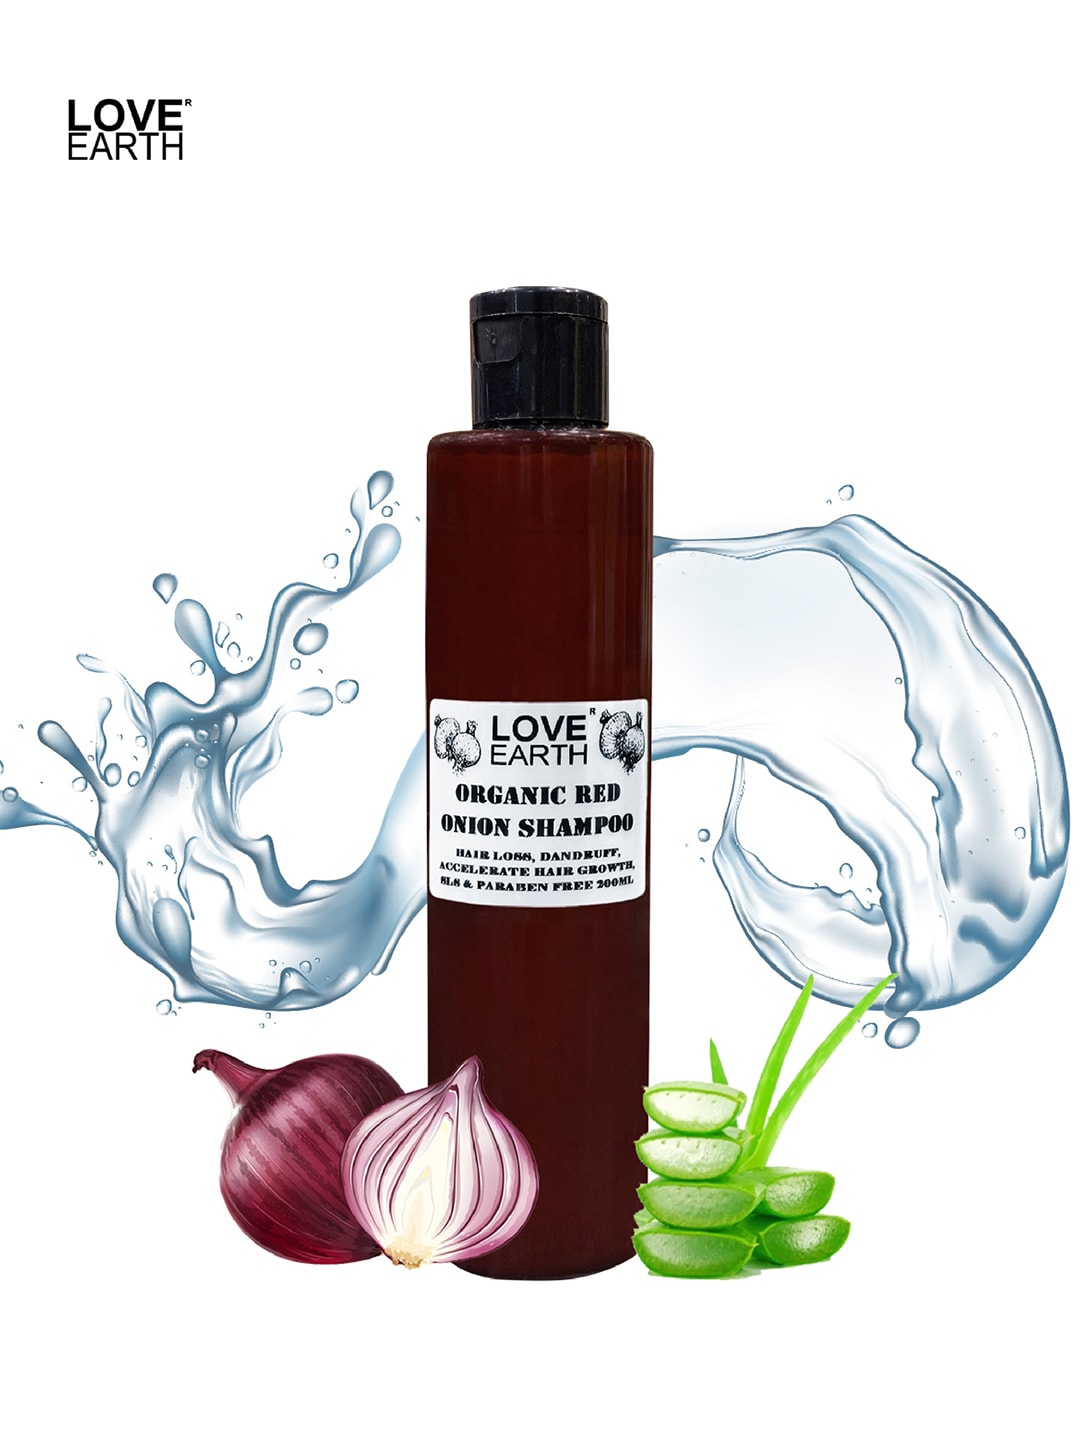 LOVE EARTH Organic Red Onion Shampoo with Reetha & Aloe Vera Extract 200 ml Price in India